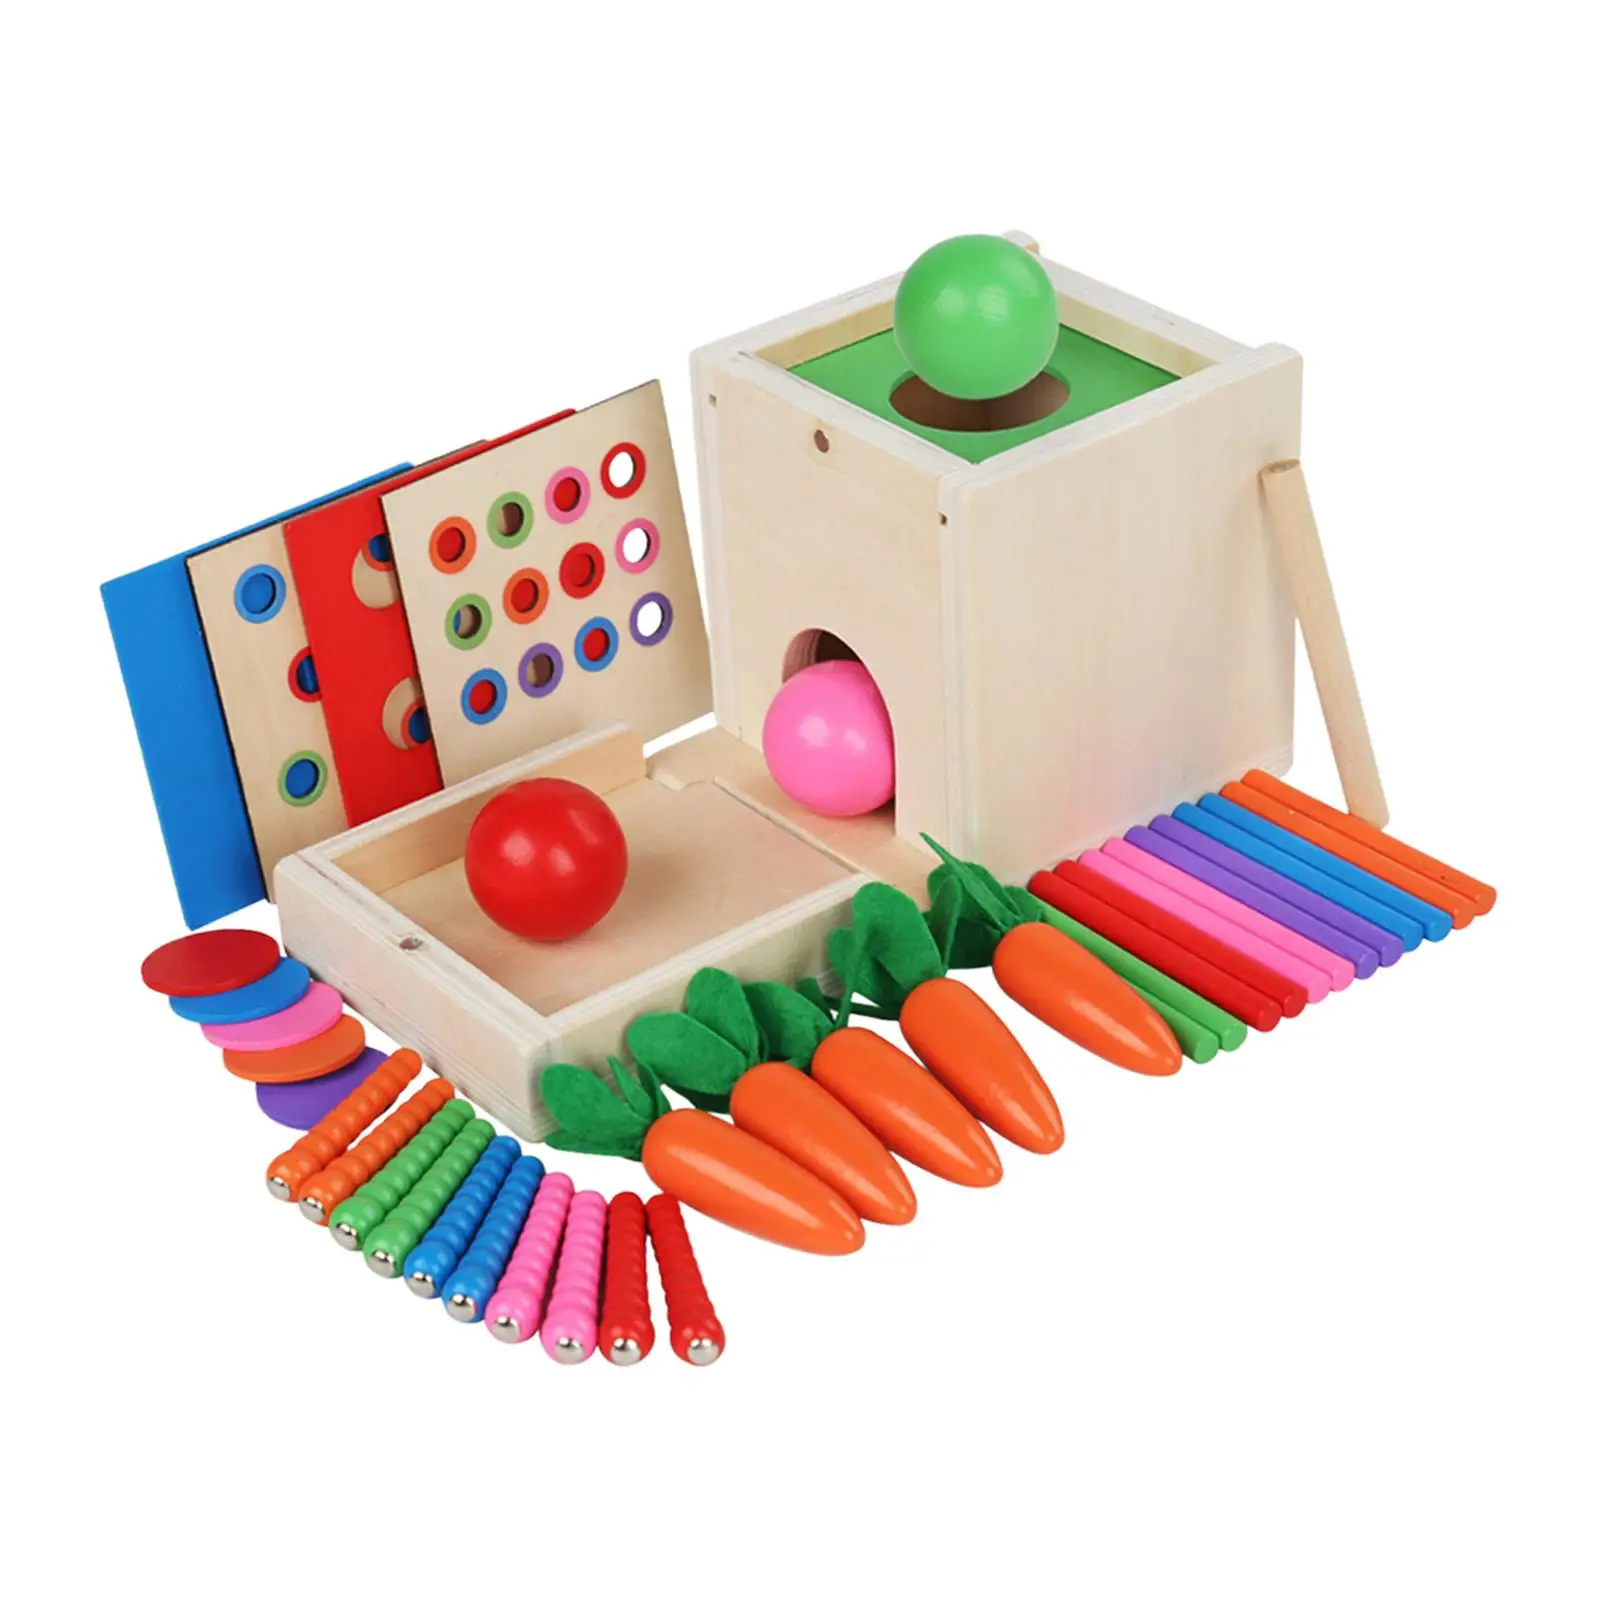 Object Permanence Box Activities Wood Shape Sorting for Boys Girls Preschool